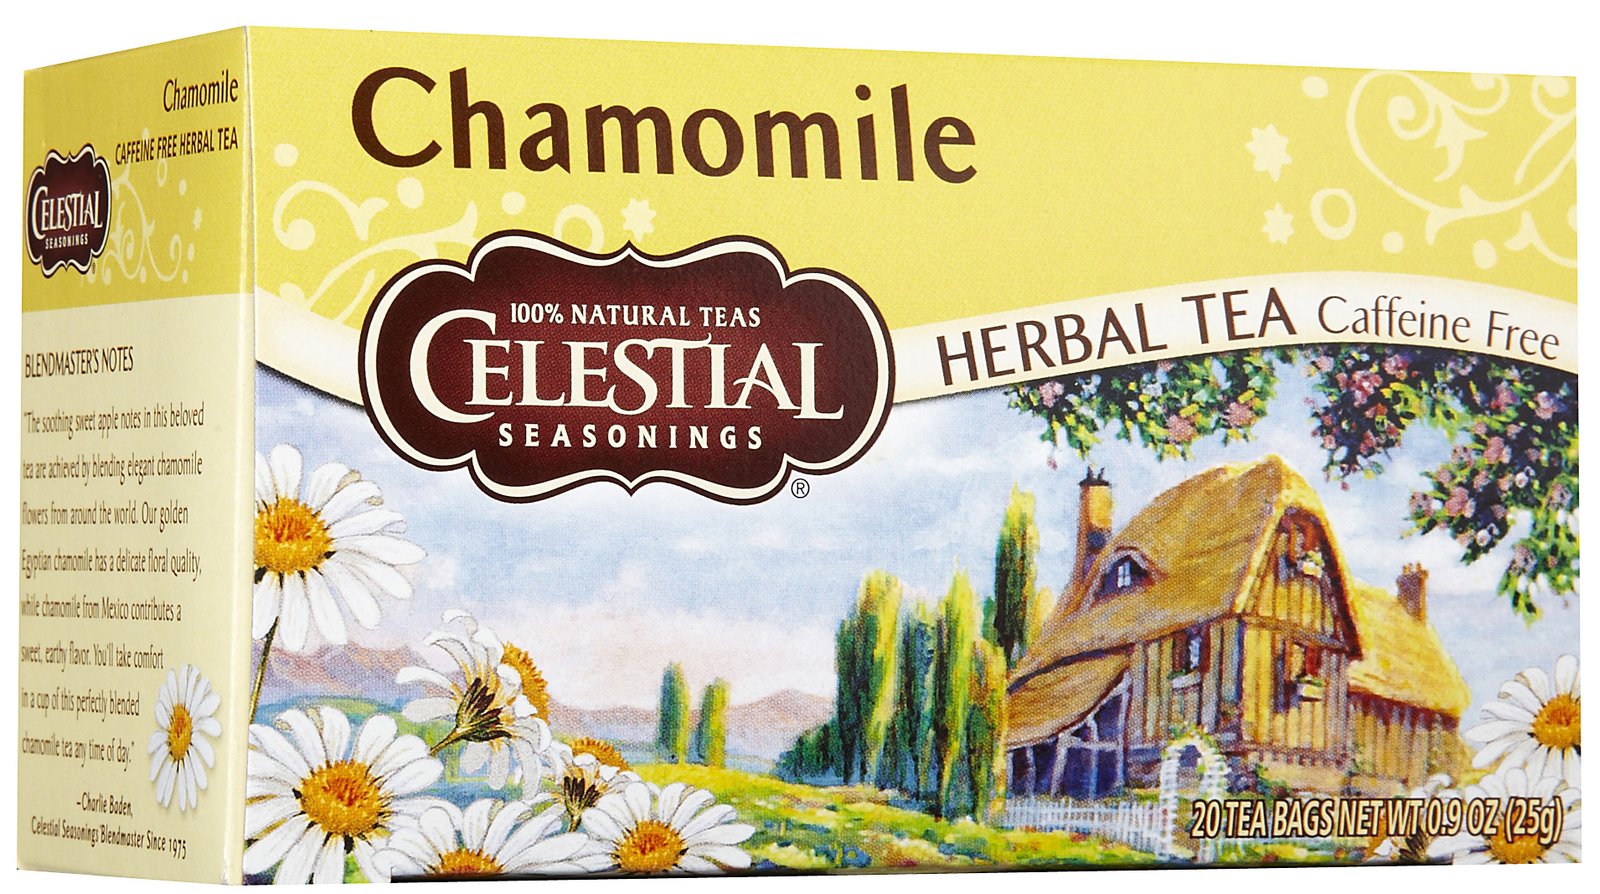 Celestial Seasoning Tea Bags Just $0.87 at Target Thru 11/8